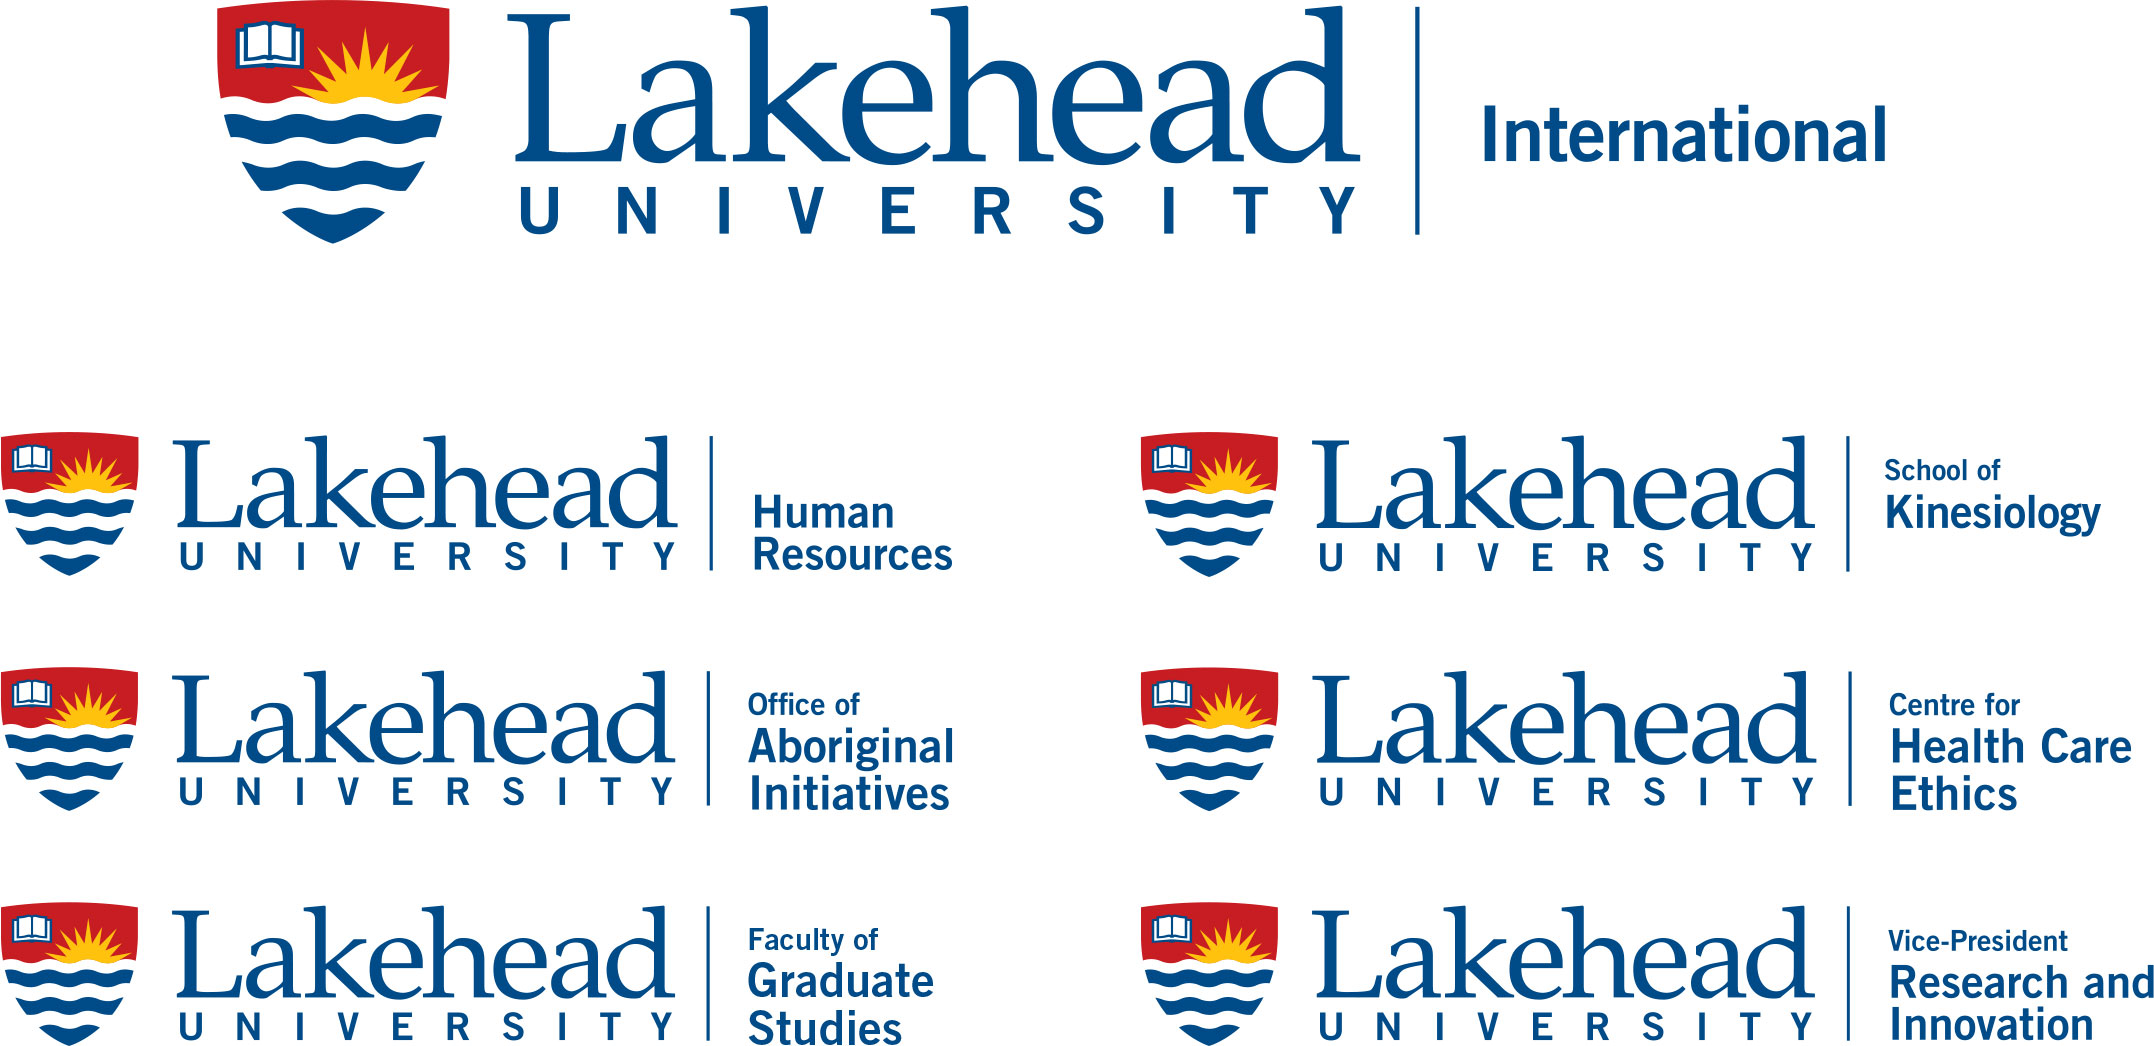 Lakehead University unit identities